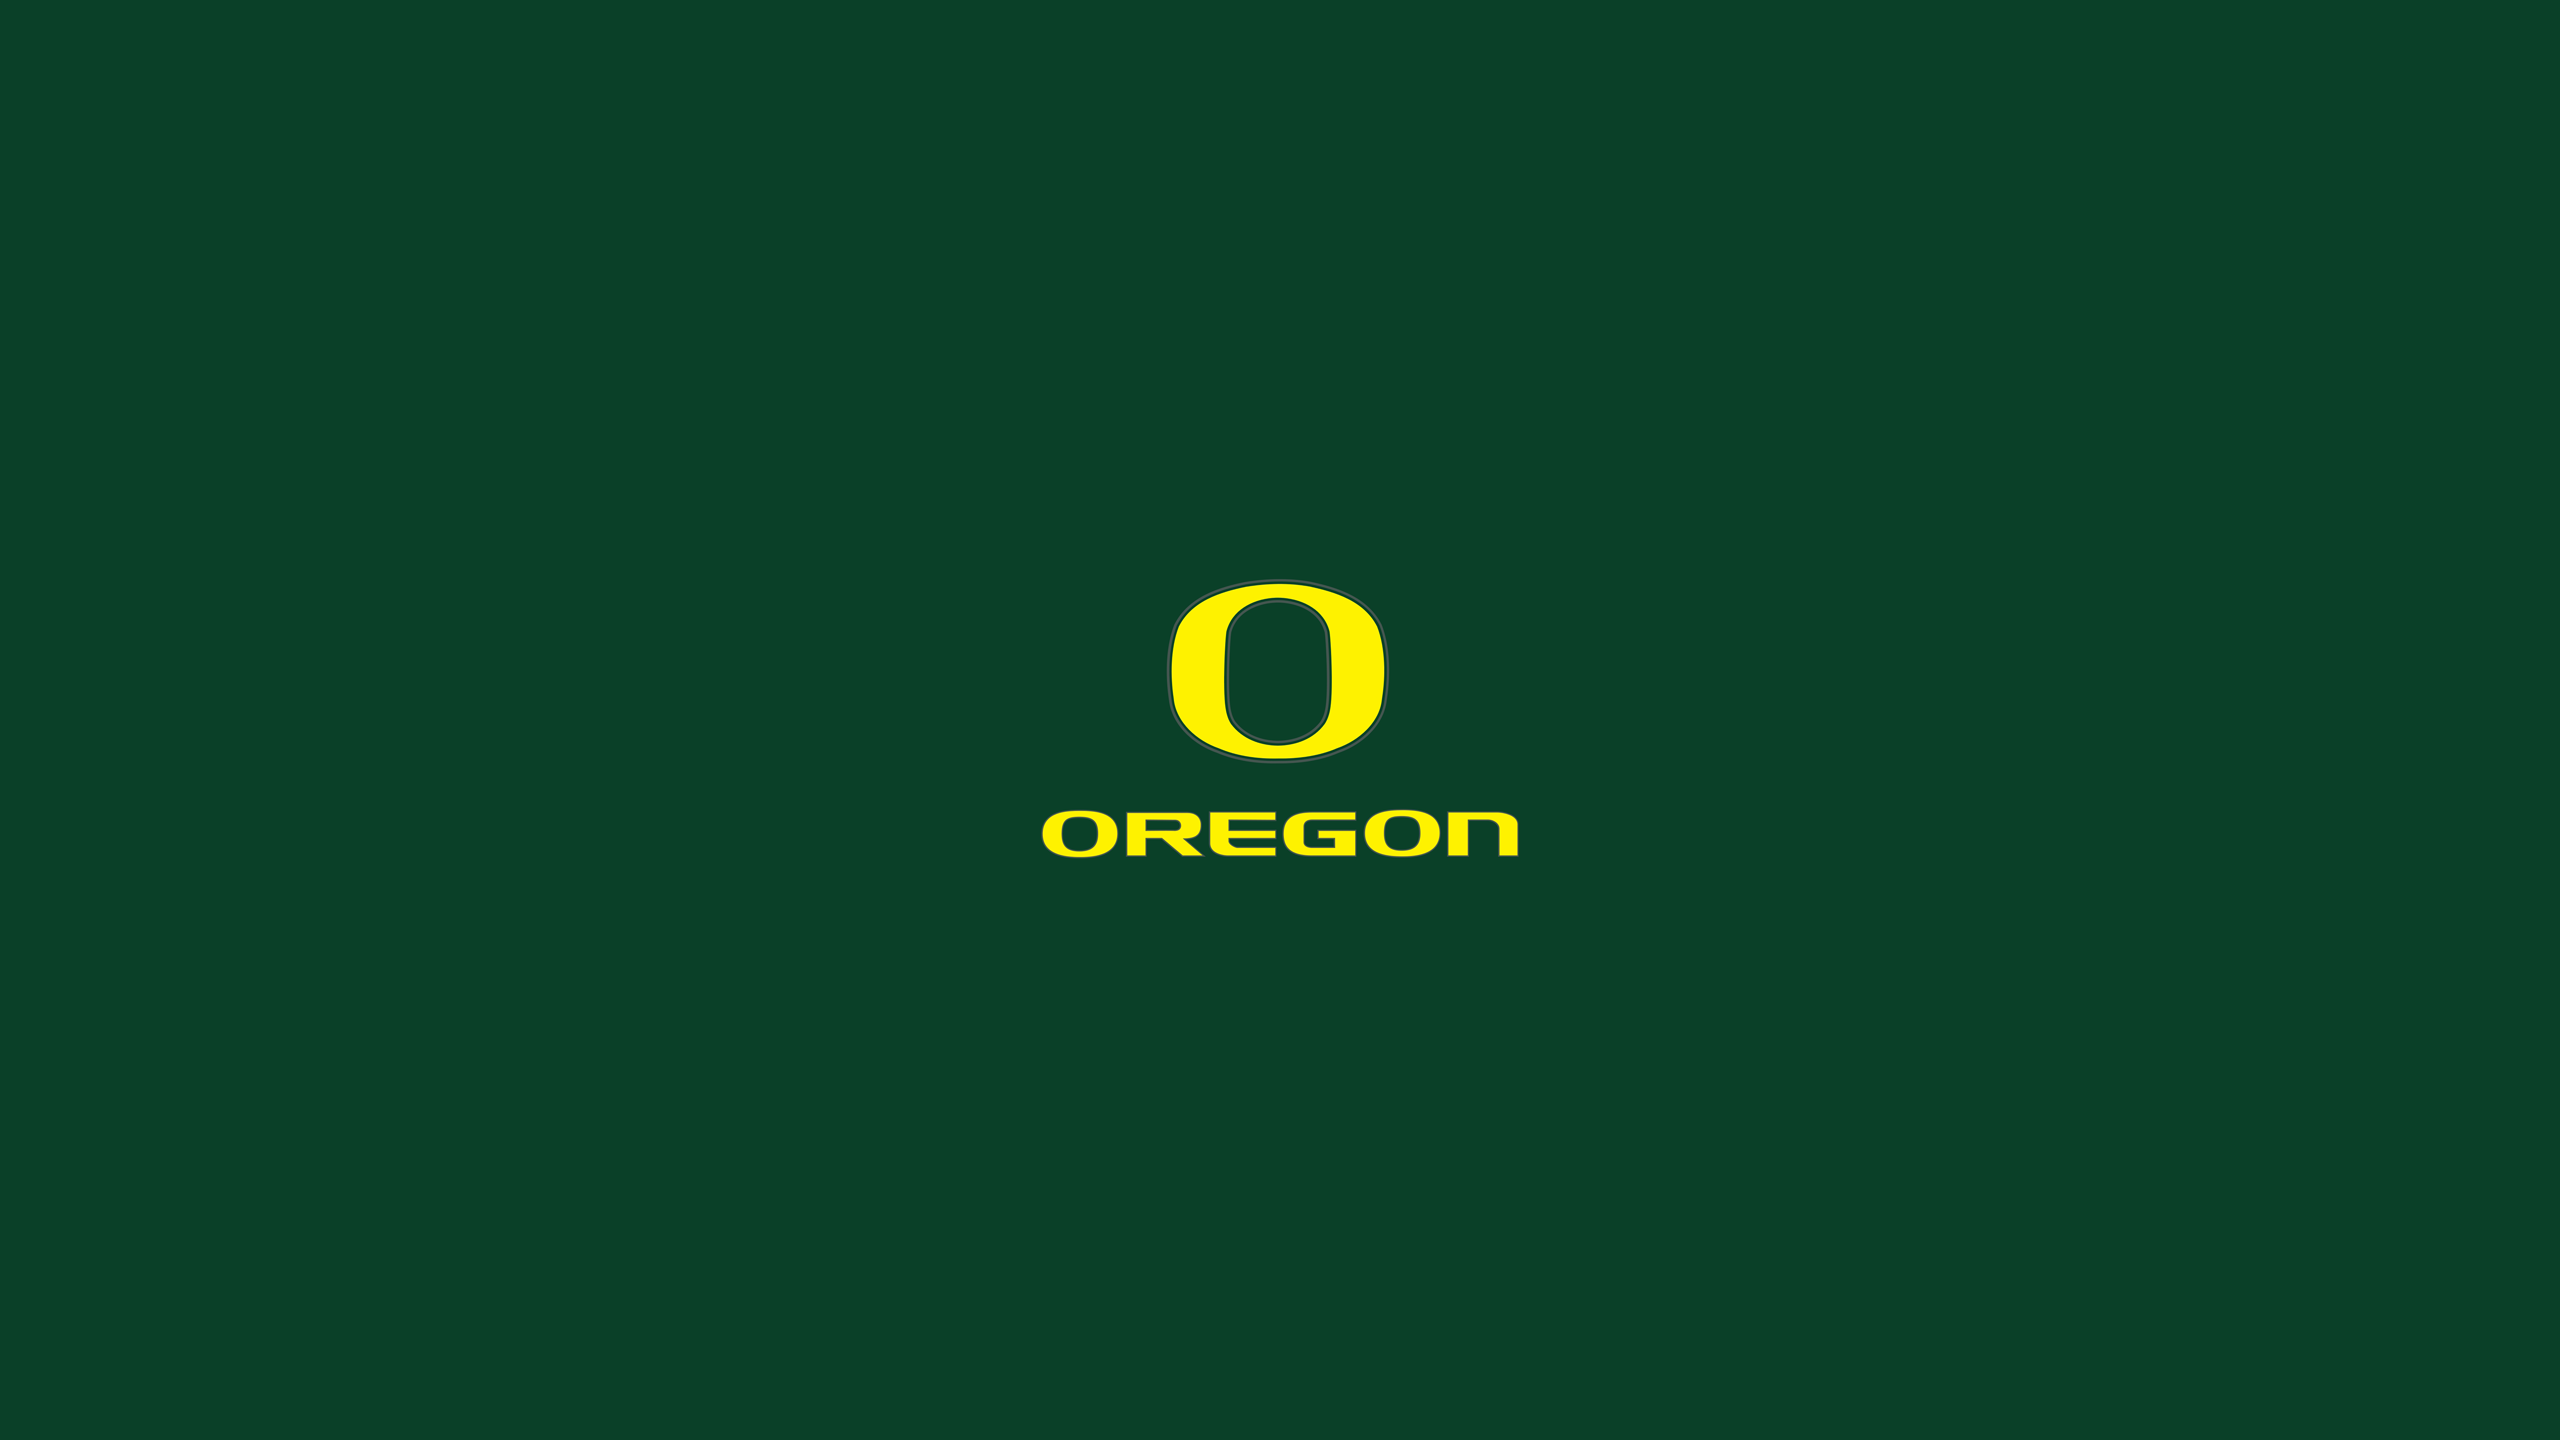 Download Oregon Ducks Logo Wallpaper 8295 2560x1440 px High ...